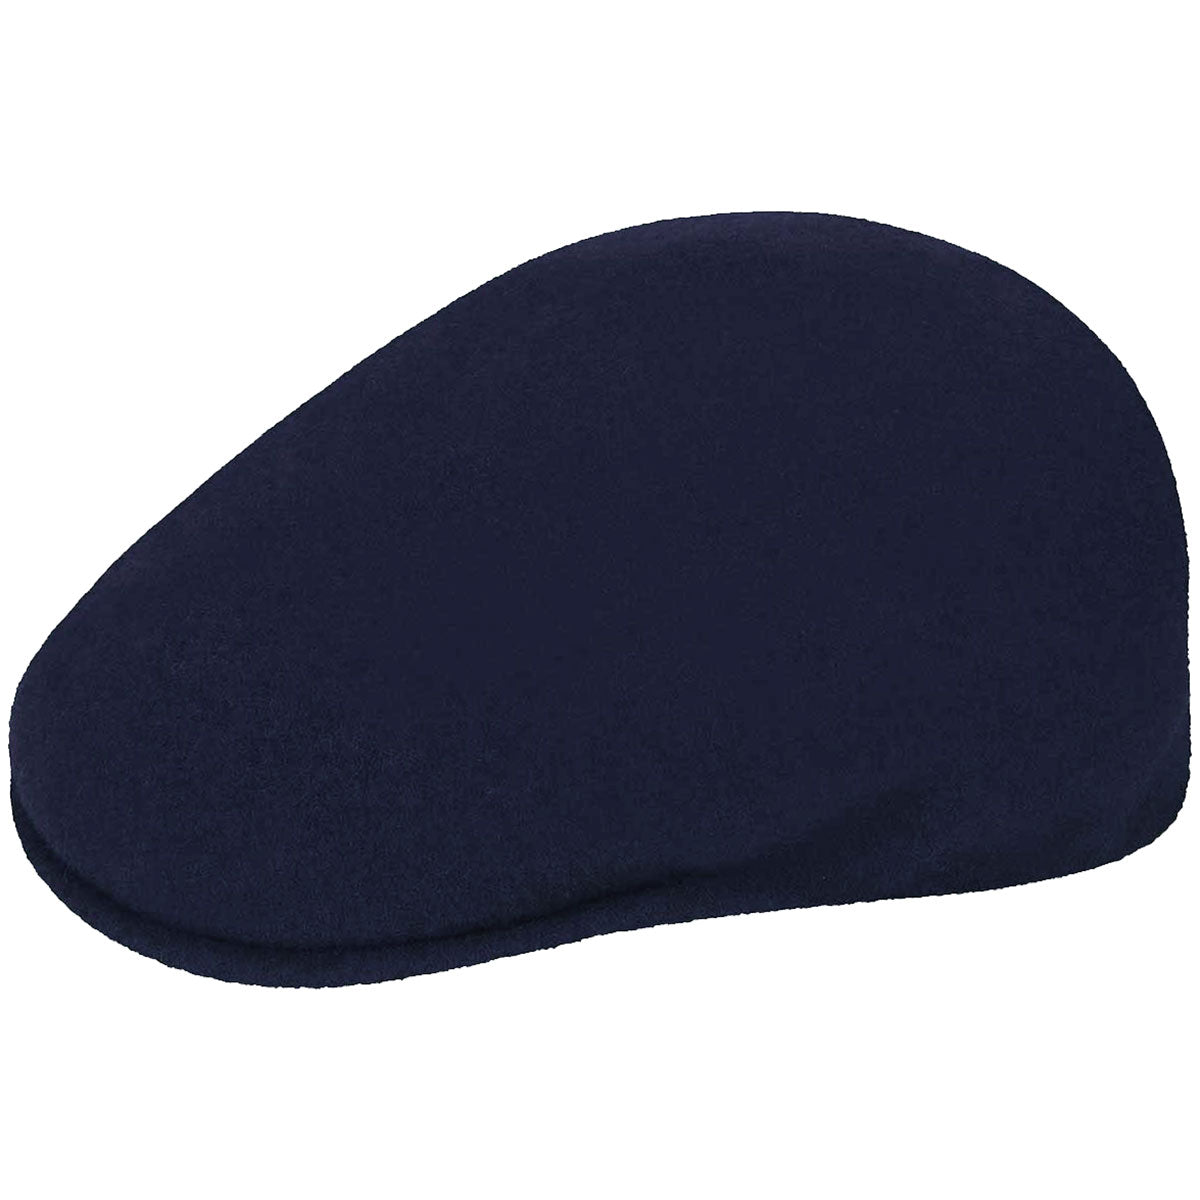 Kangol Navy Blue Wool Herringbone Cap - Dudes Boutique